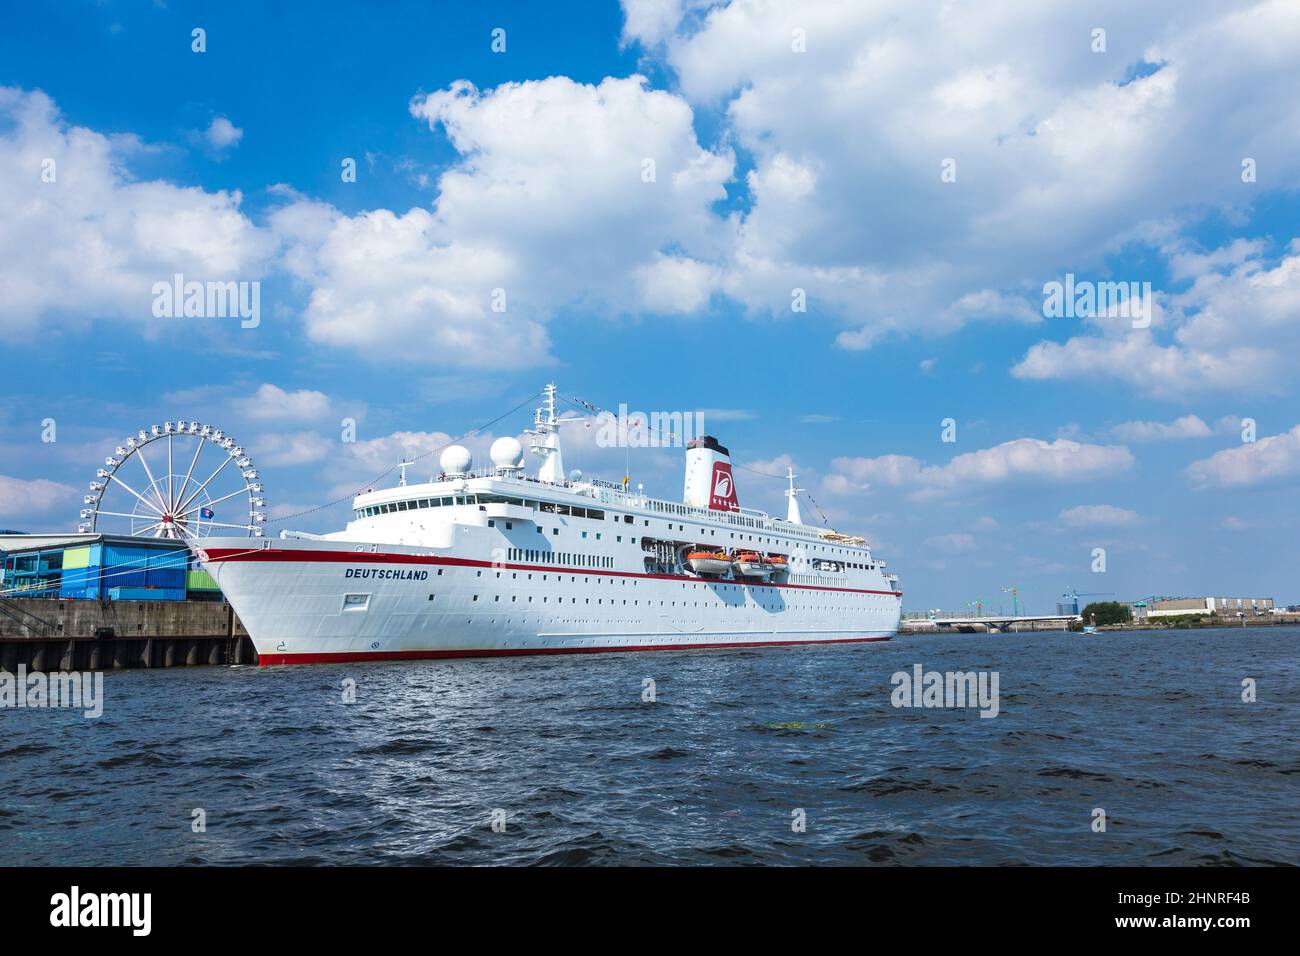 Cruise ship MS DEUTSCHLAND at river Elbe Stock Photo